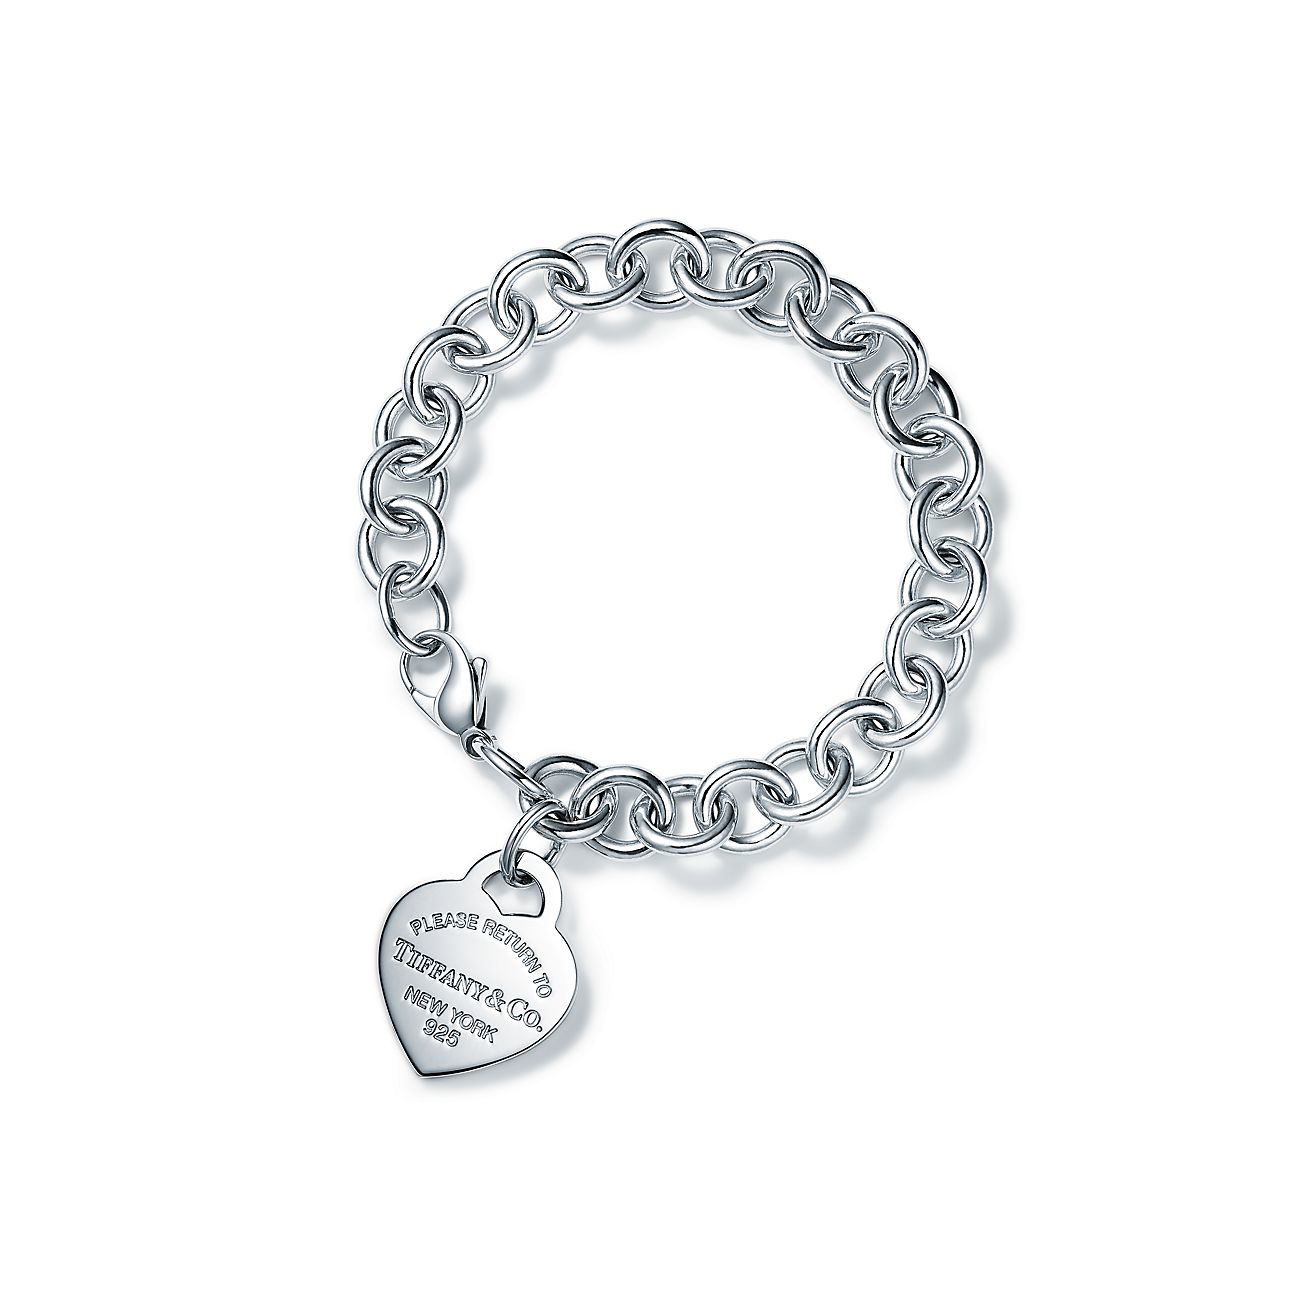 Two Hearts Corded Bracelet | The Catholic Company®